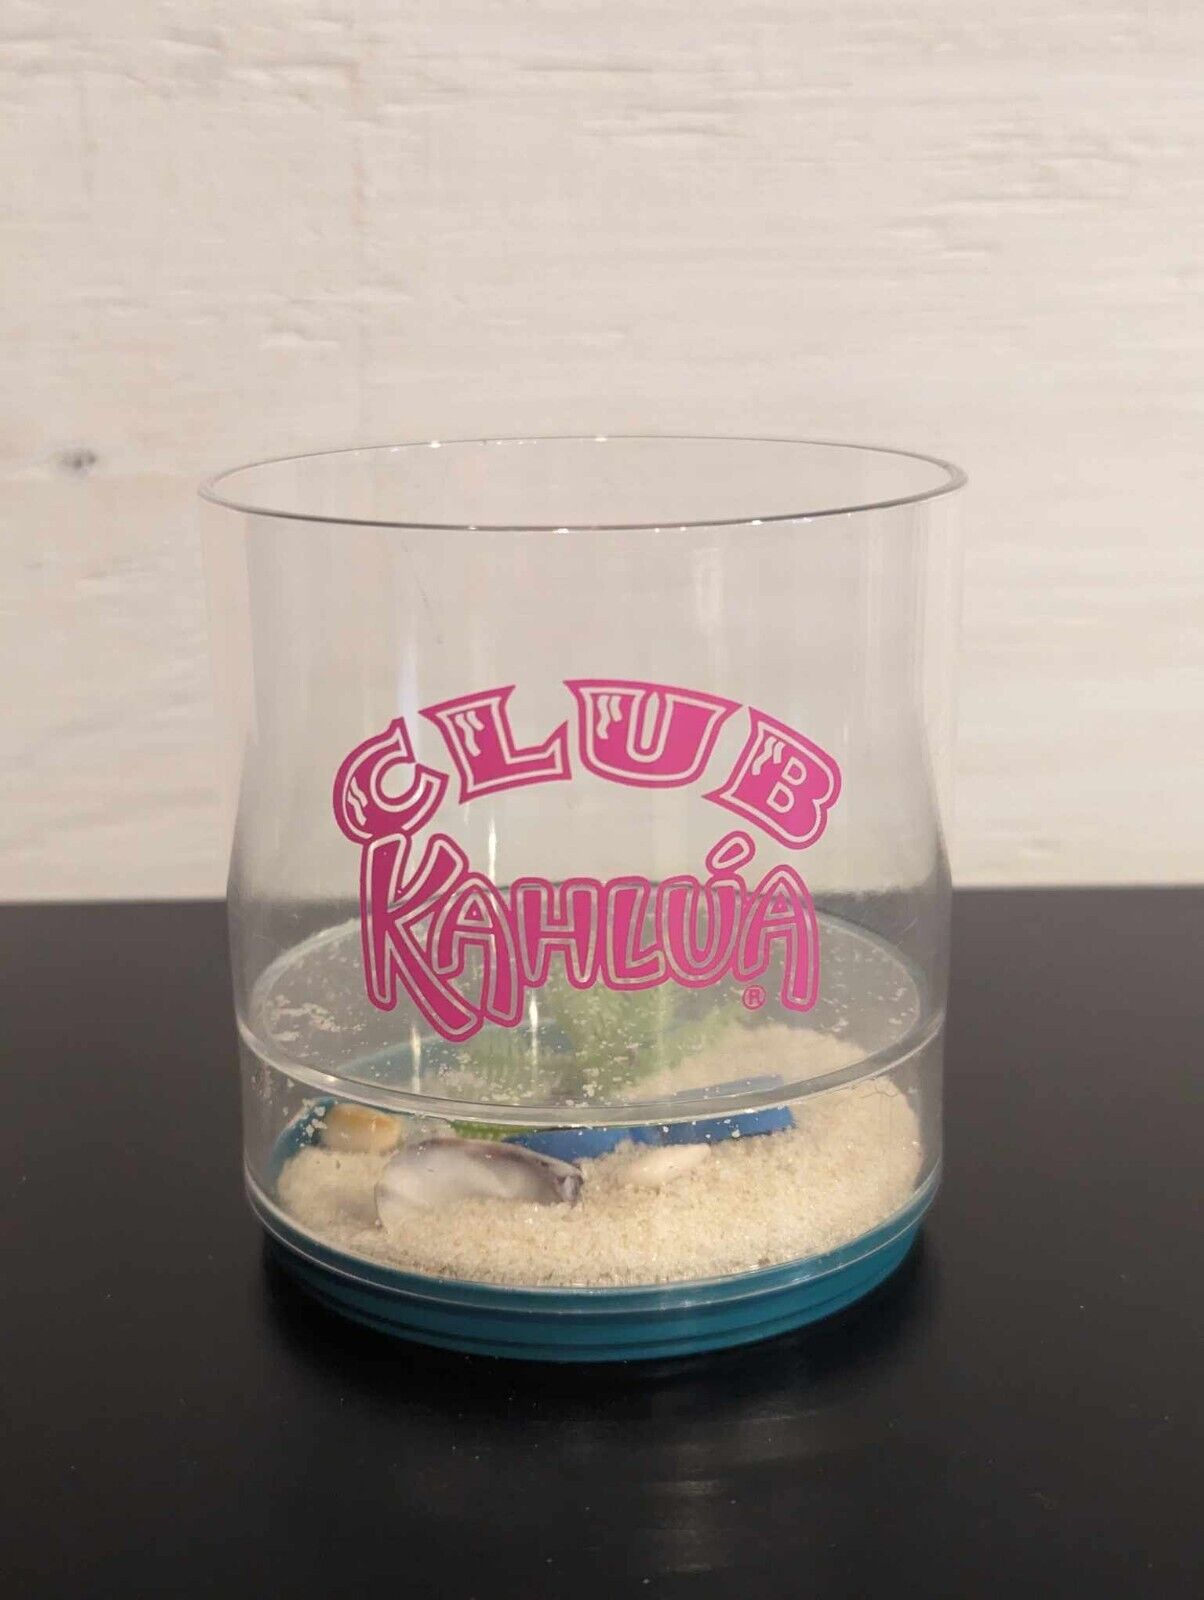 Collectible Club Kahlua Coffee Liqueur 1992 Plastic Novelty Beach Glass HOWW